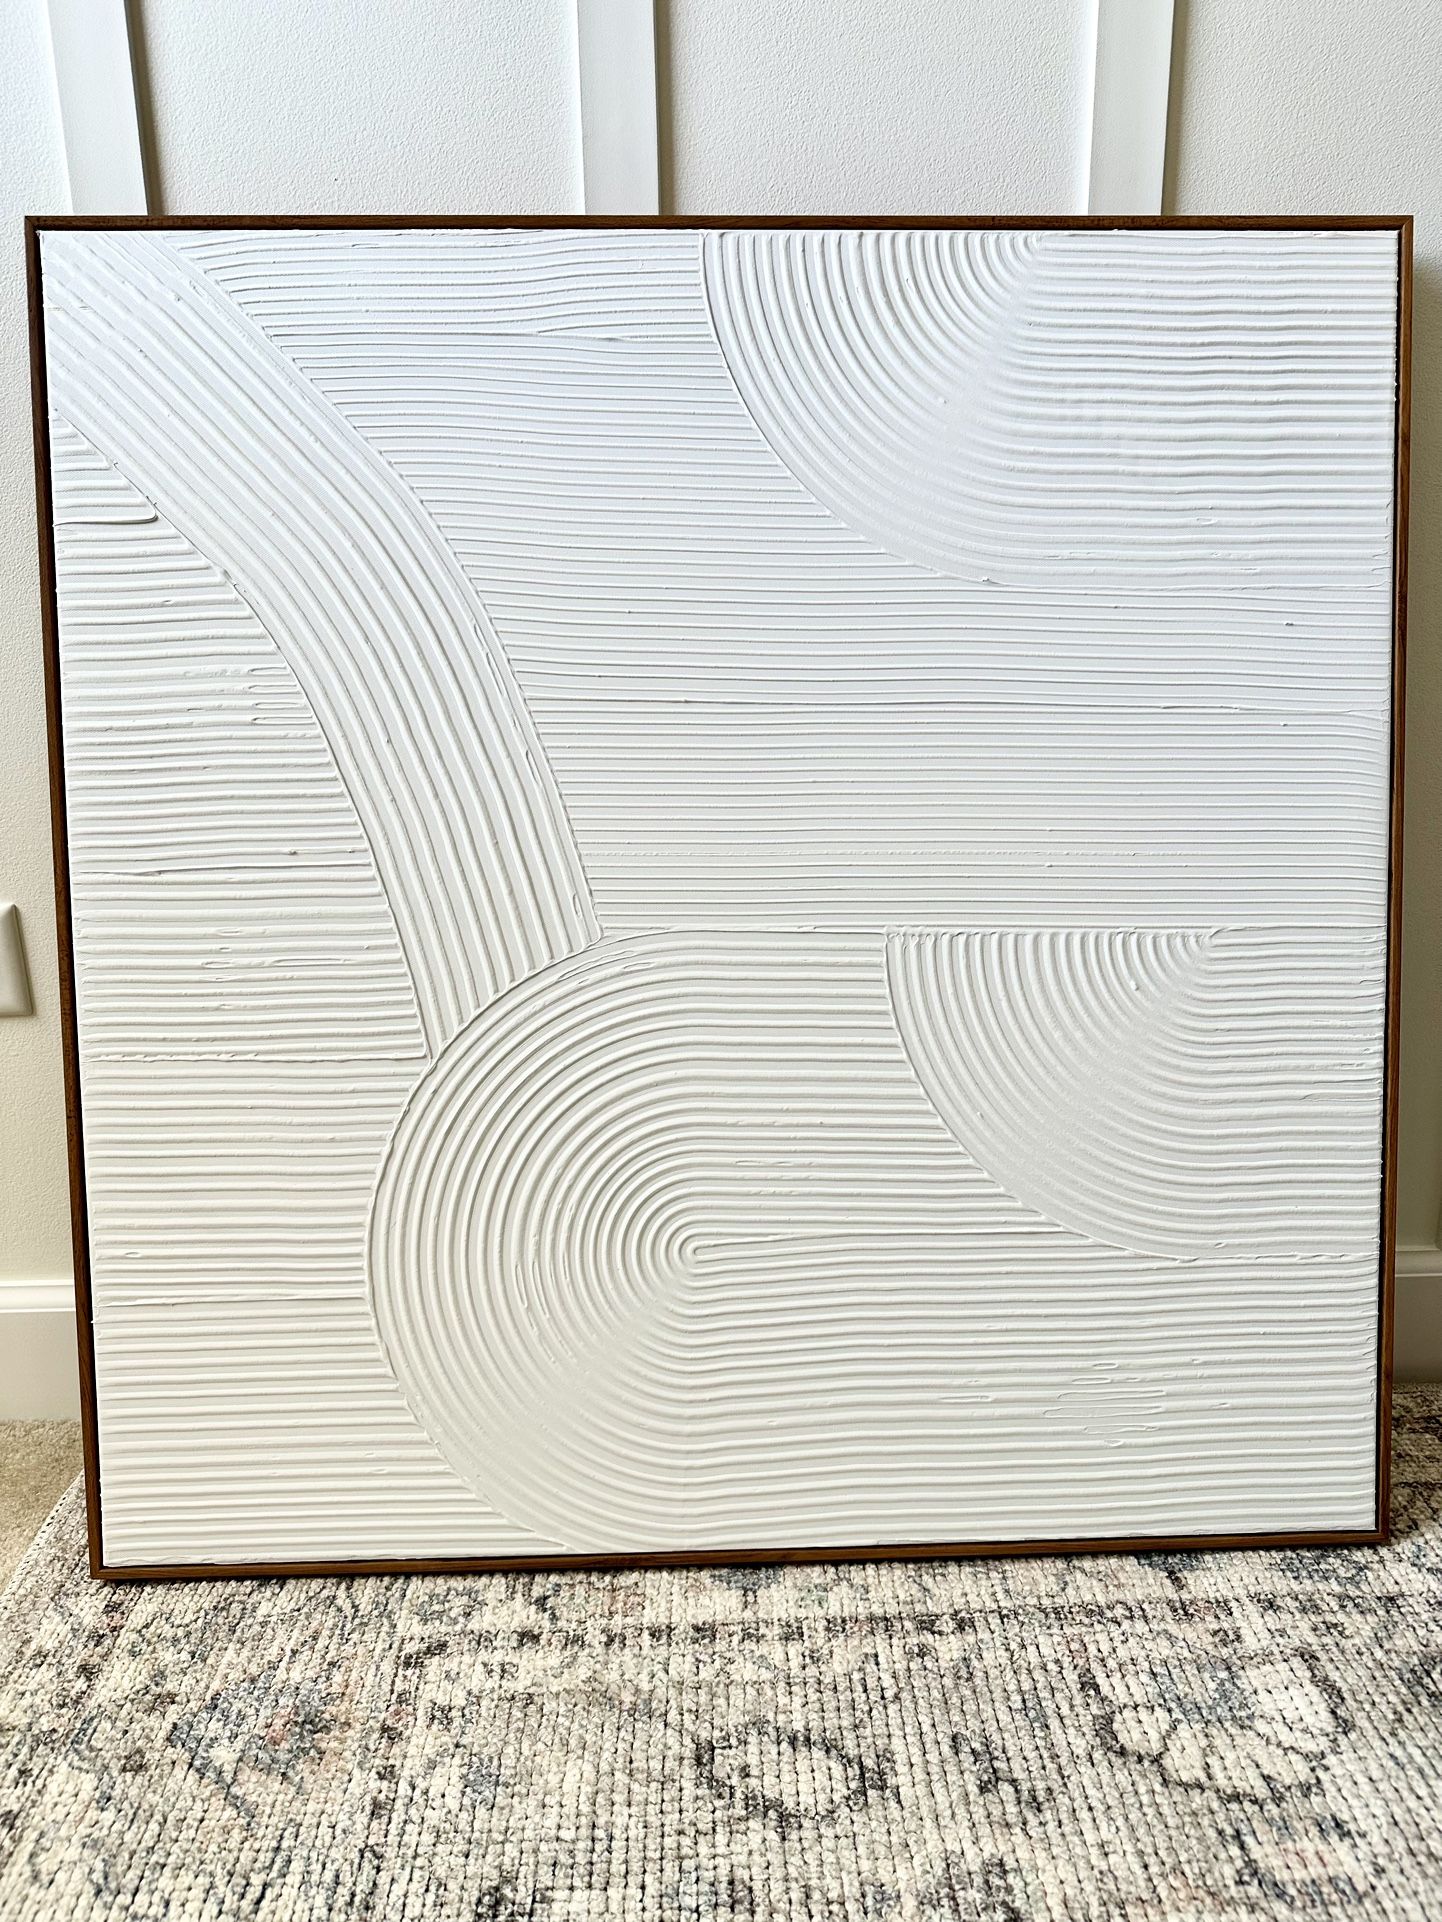 36”x36” Plaster Canvas Framed artwork 